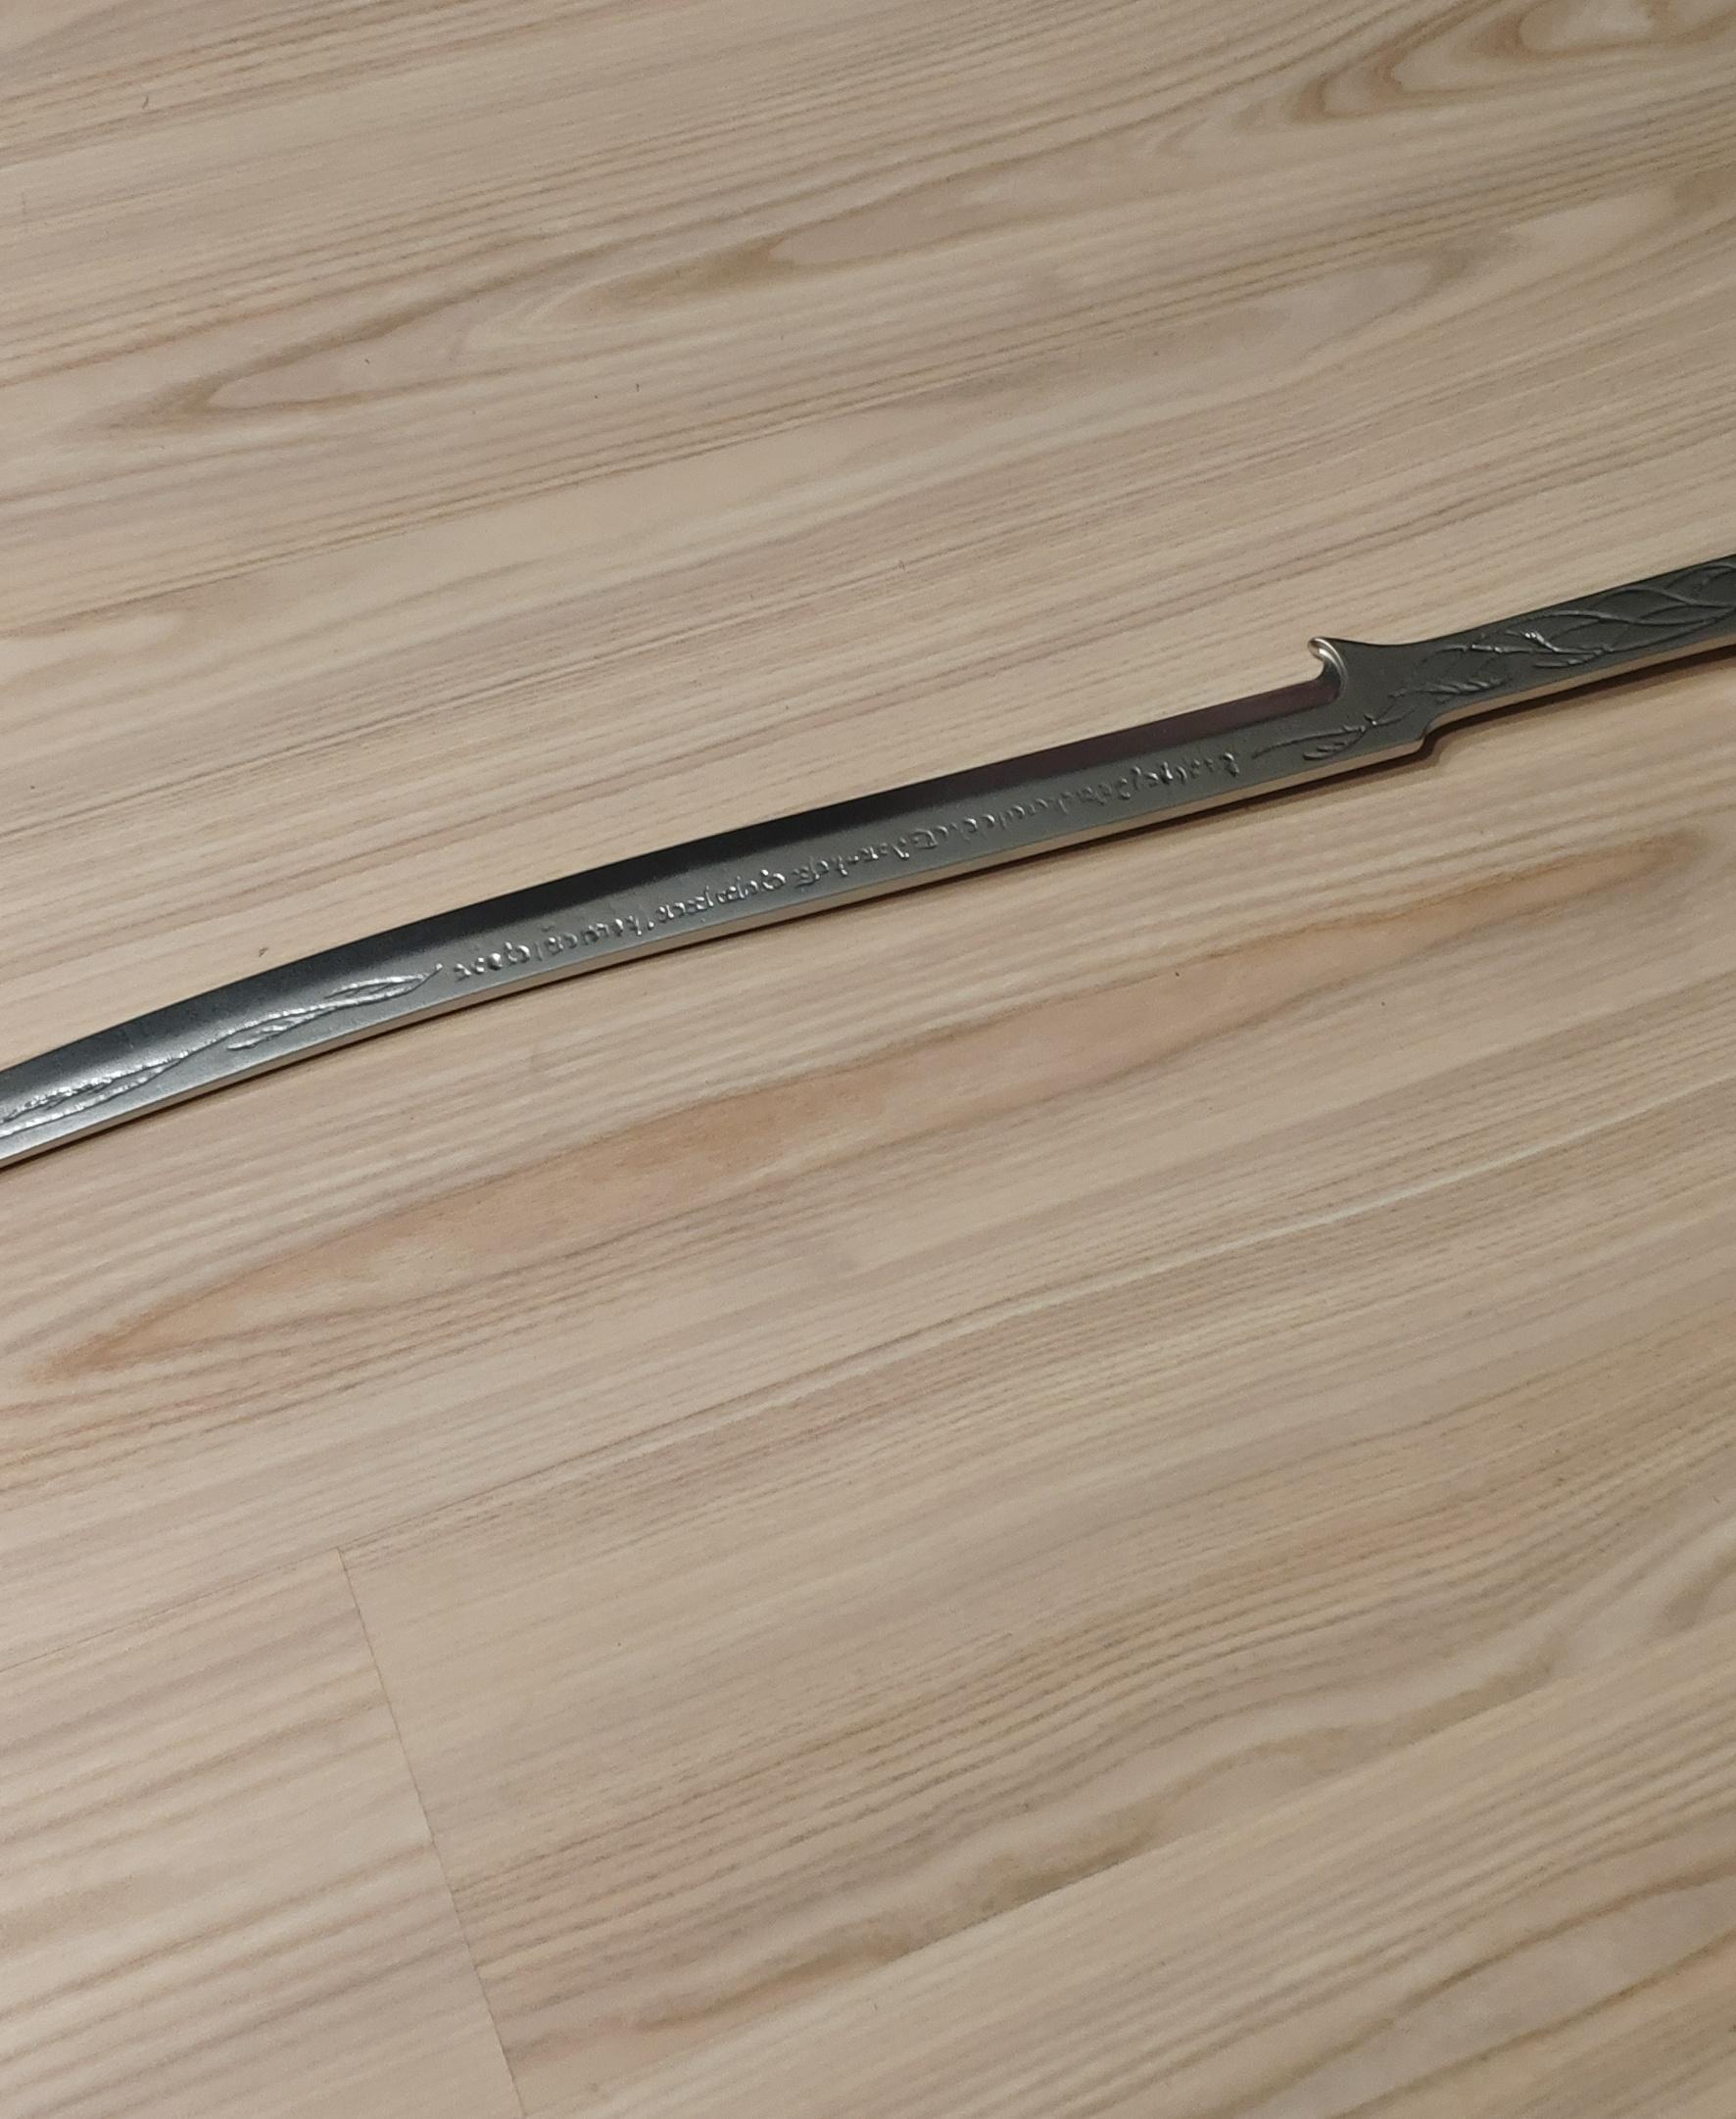 HADHAFANG - Arwen sword FROM LOTR 3d model